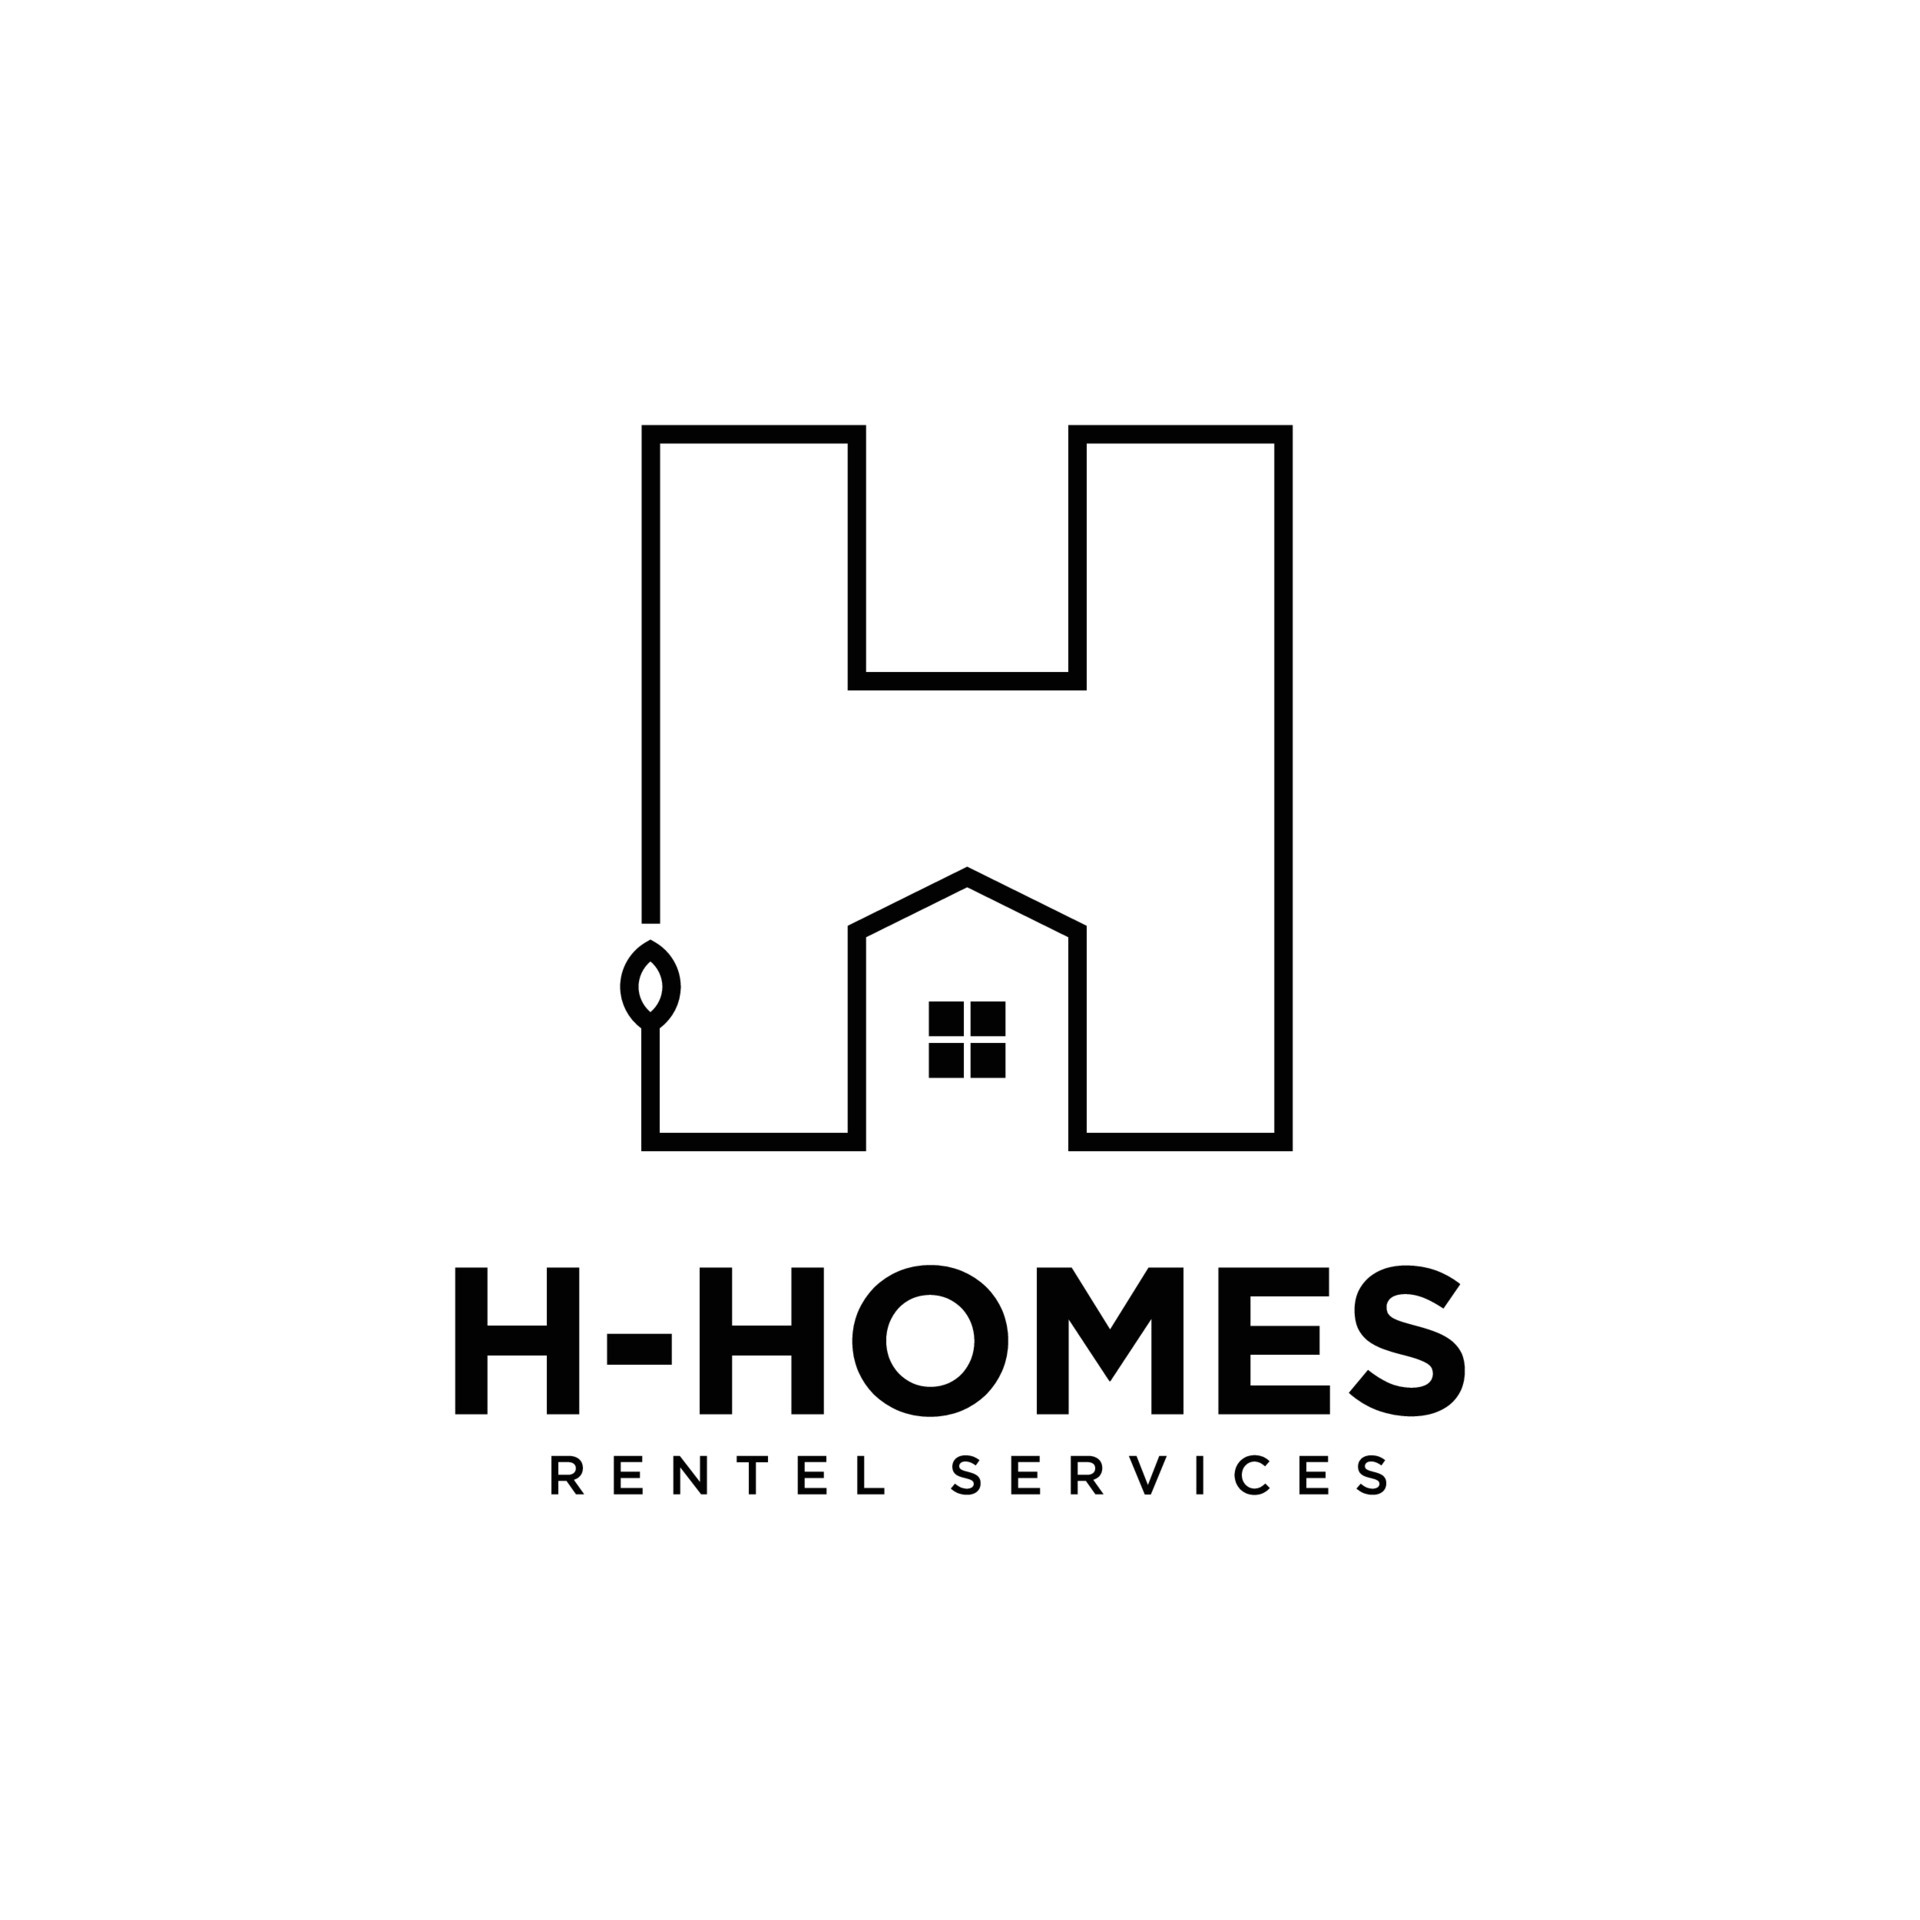 Letter H typrography logo design H Homes concept design 4896572 Vector ...